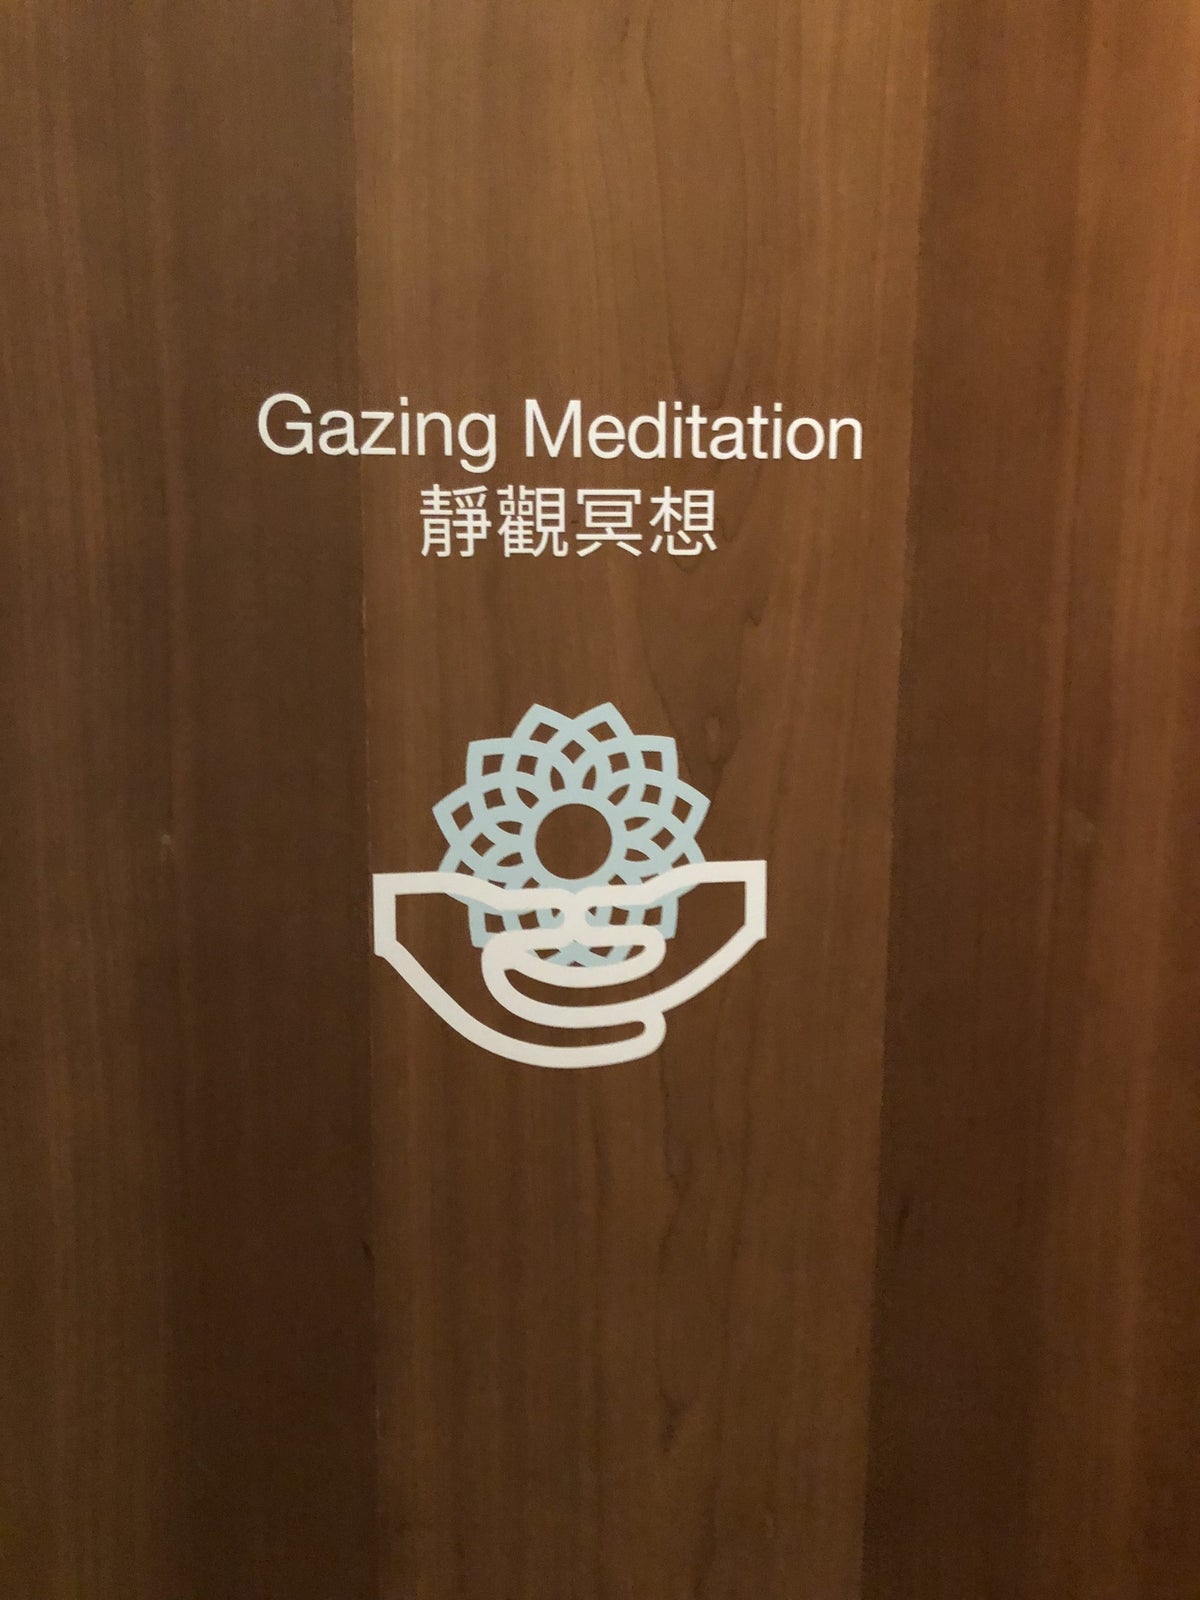 The Pier, Business at Hong Kong International Airport gazing meditation